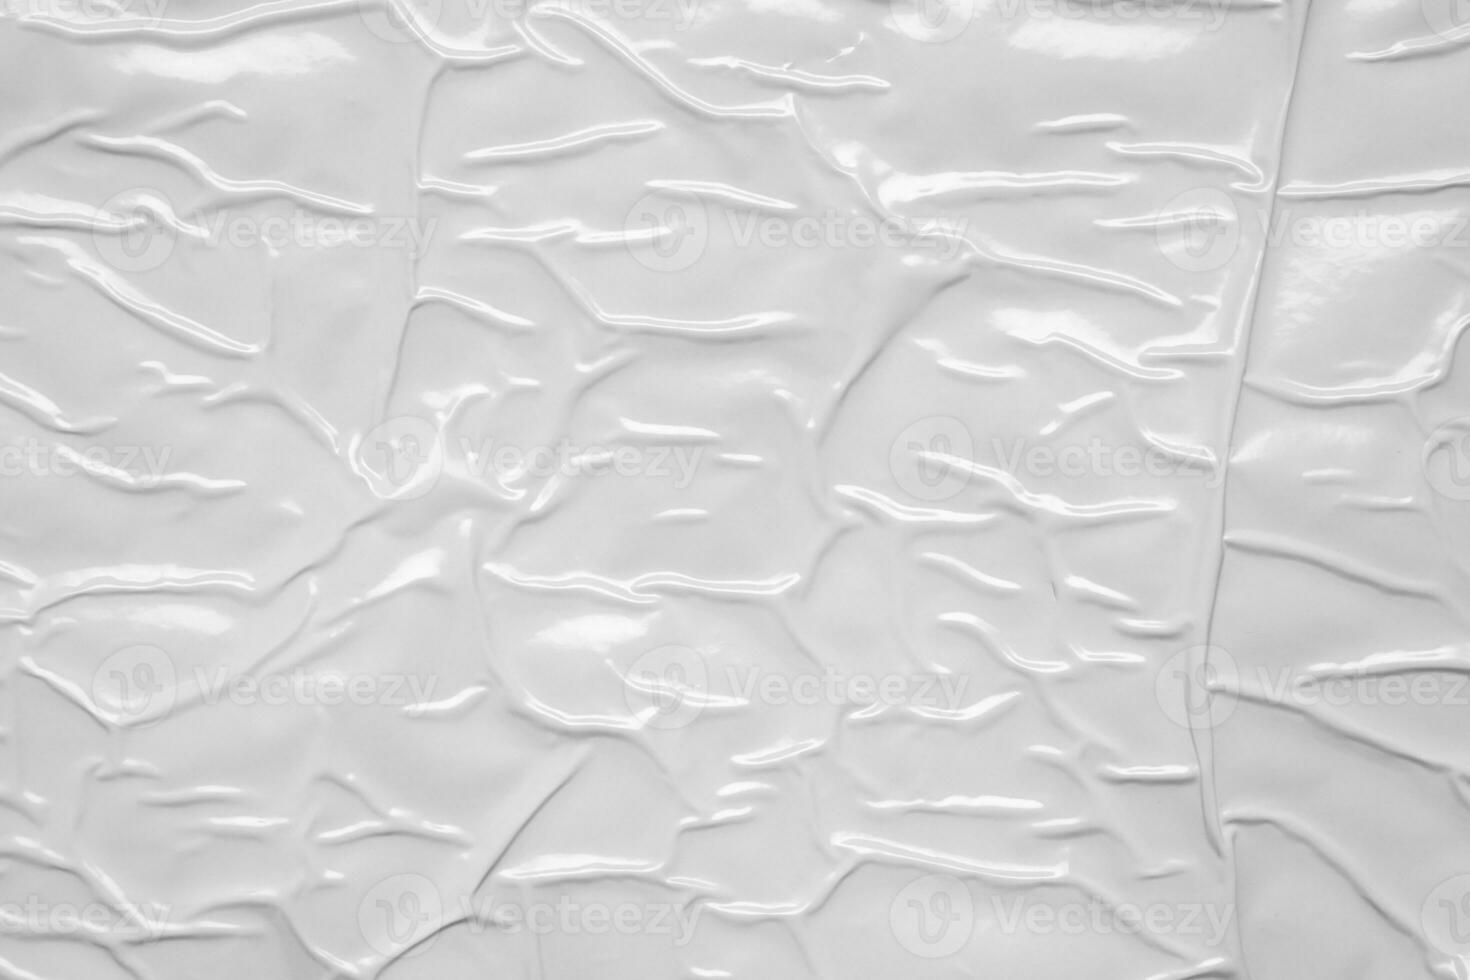 fundo de textura de saco plástico branco amassado e vincado foto